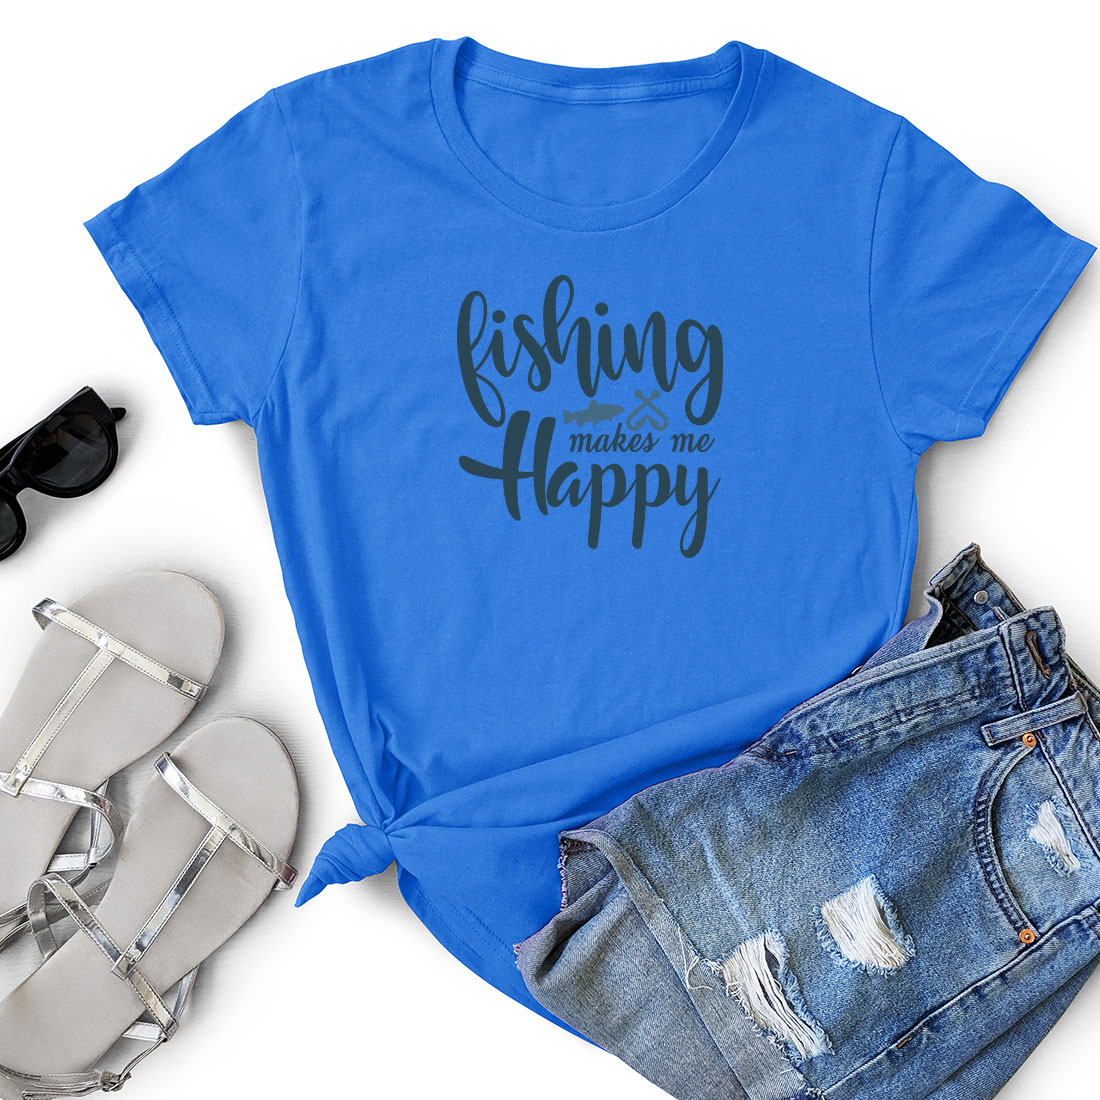 Blue shirt that says fishing makes me happy.